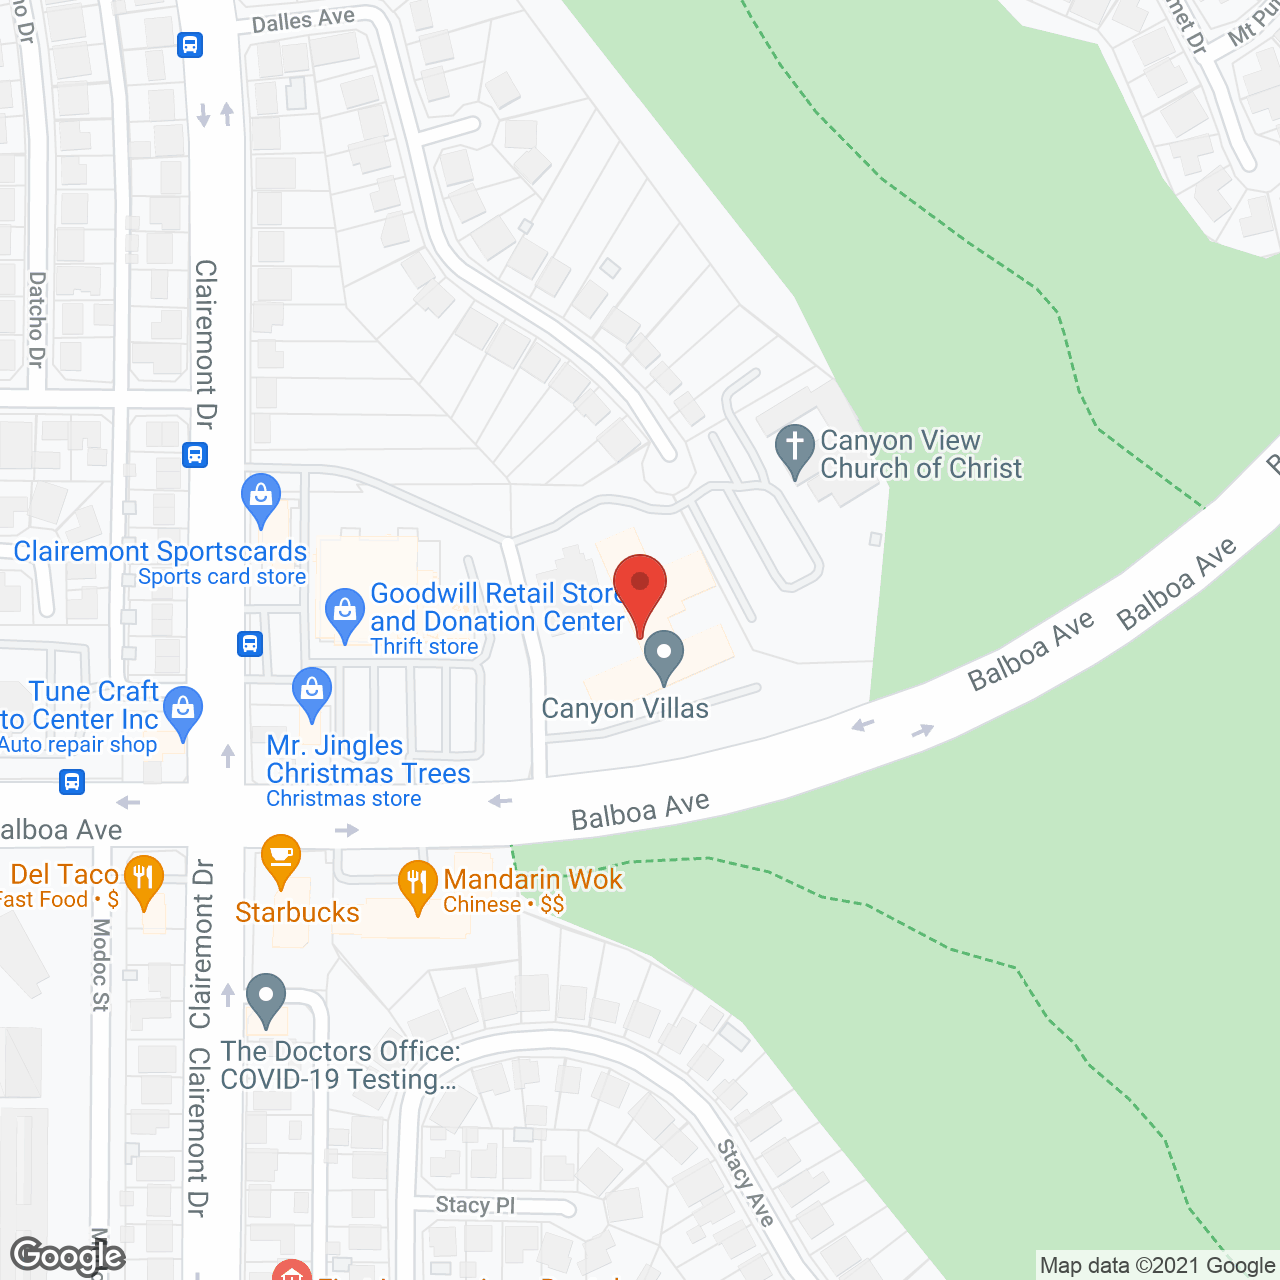 Canyon Villas in google map